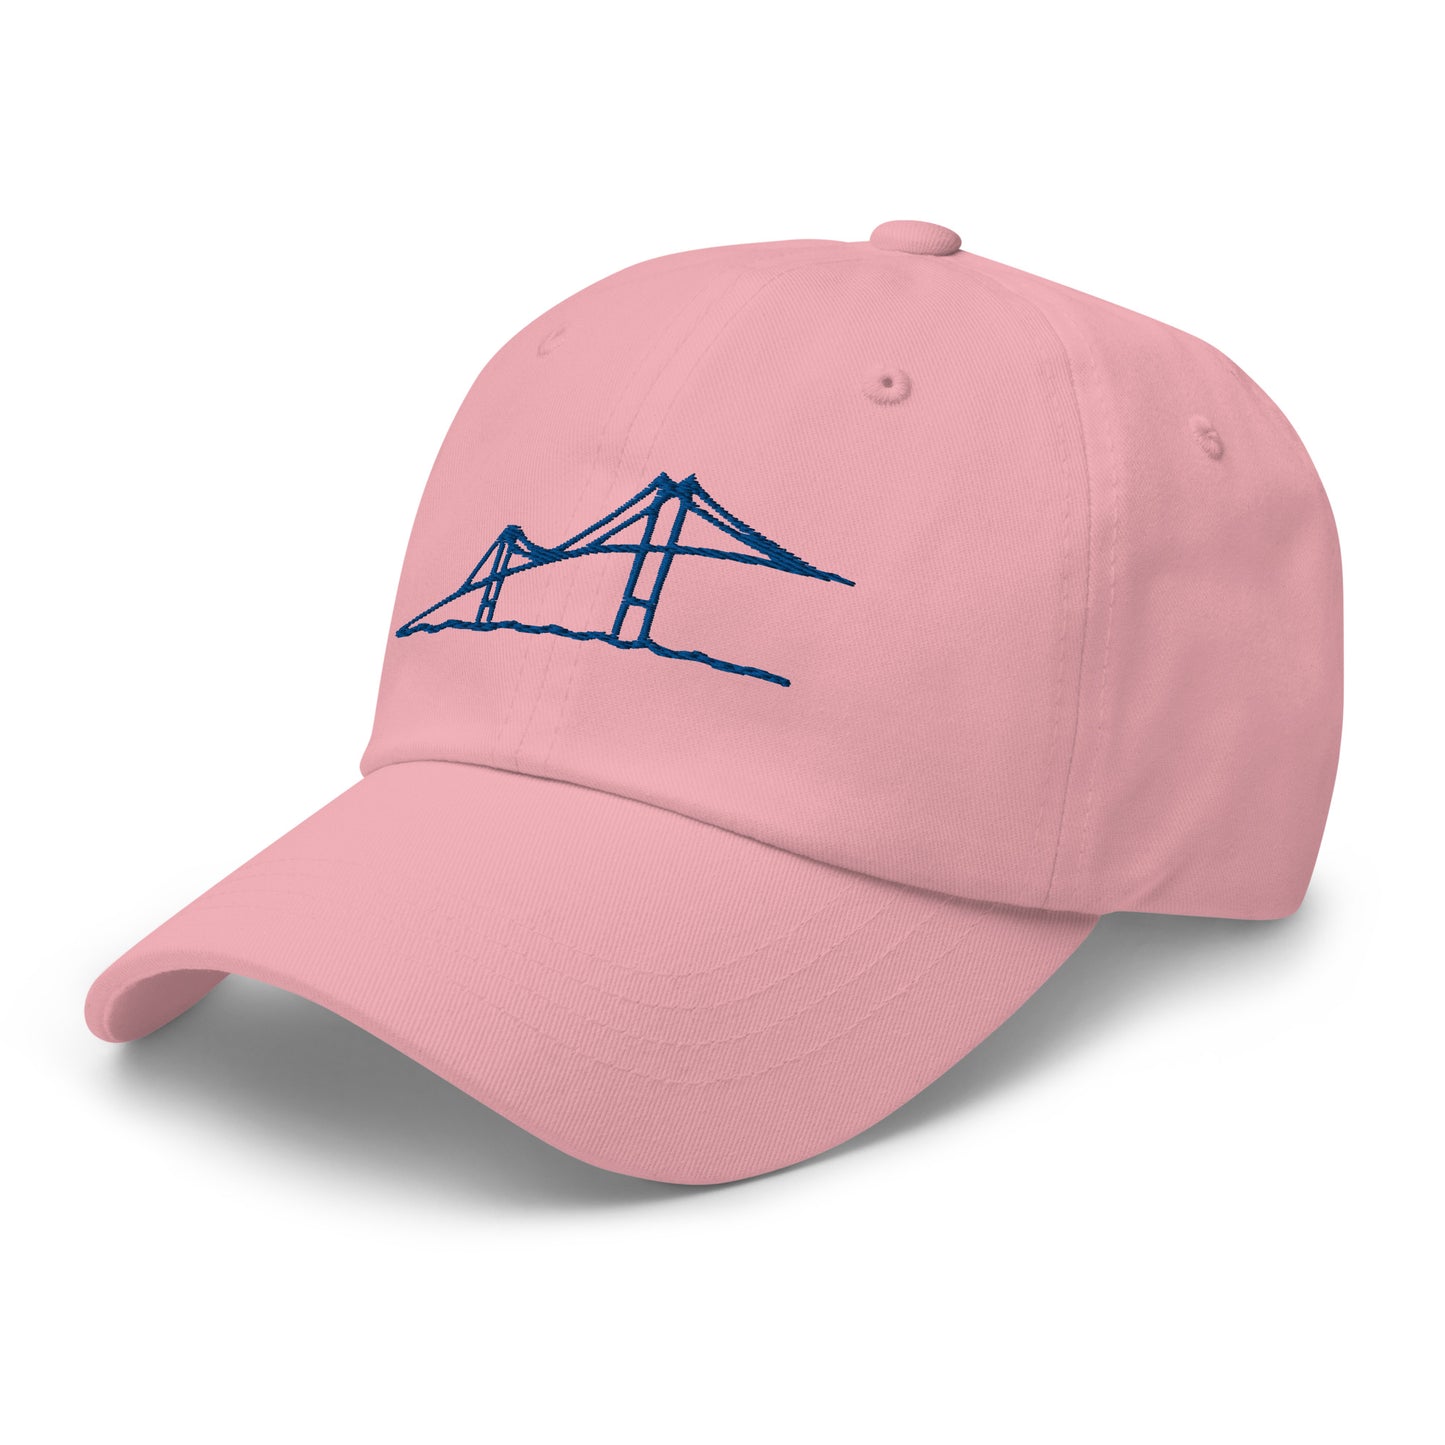 Newport Bridge Dad Hat - Royal Blue on Pink